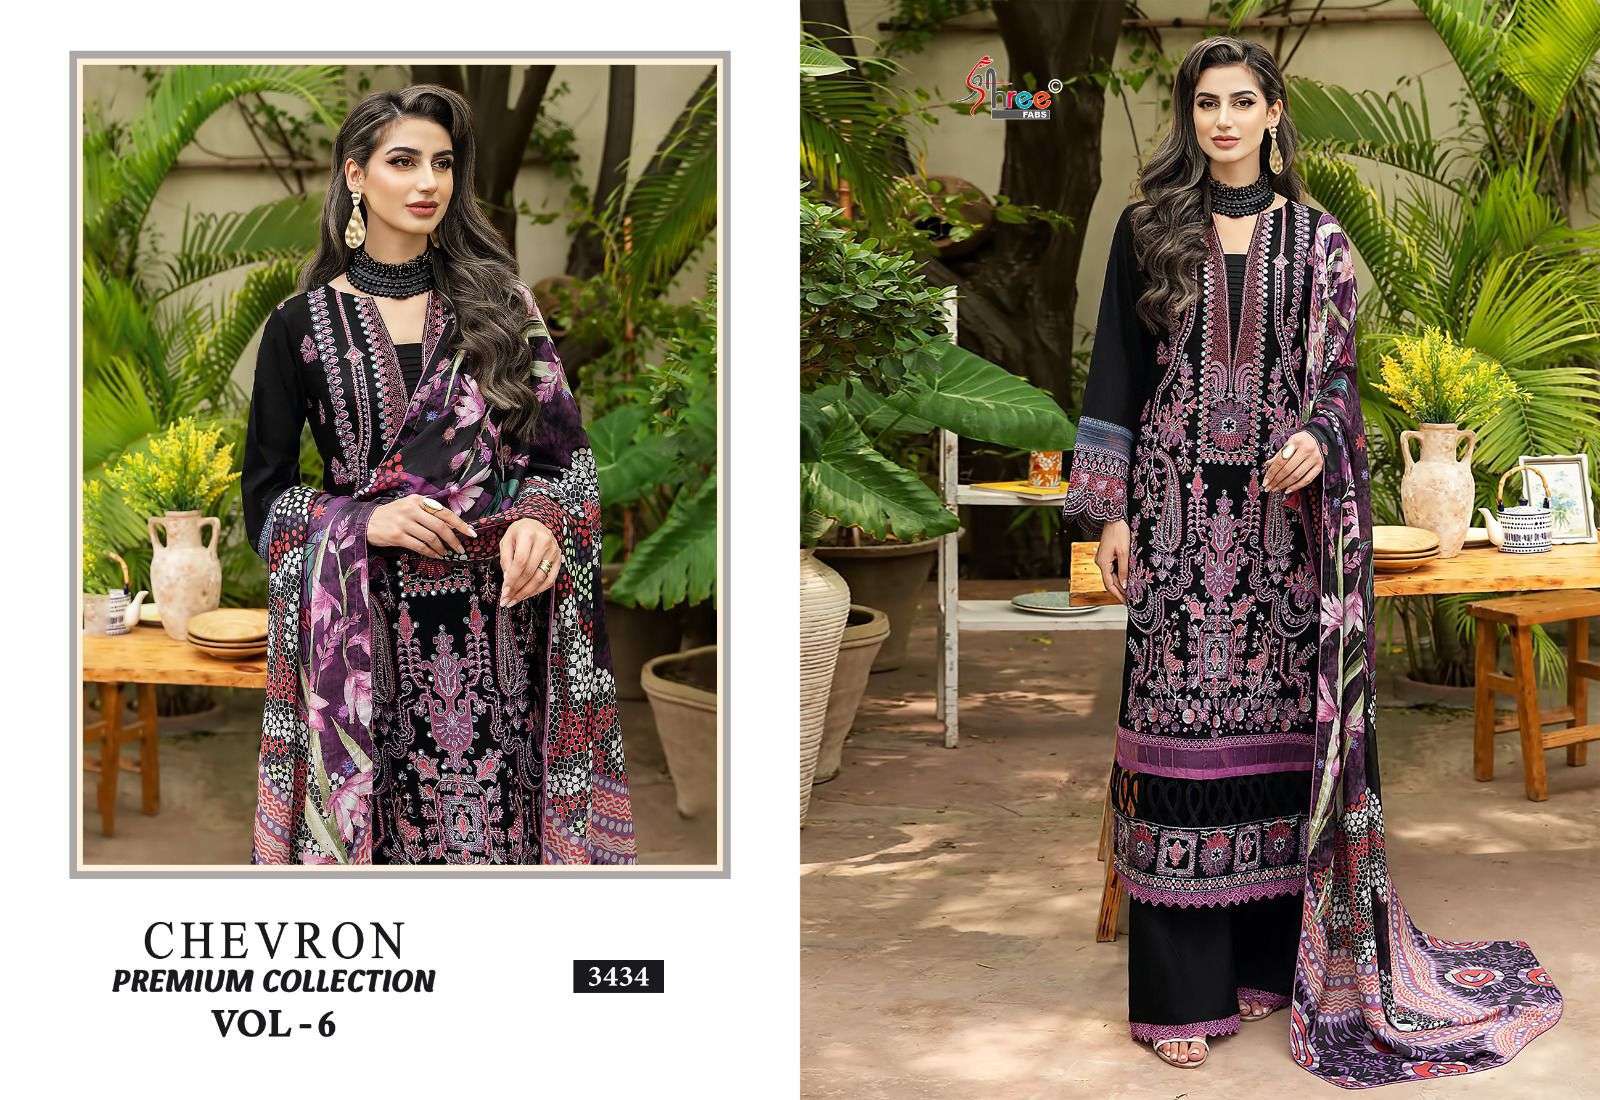 shree fabs chevron premium collection vol 6 gorgeous look salwar suit catalog